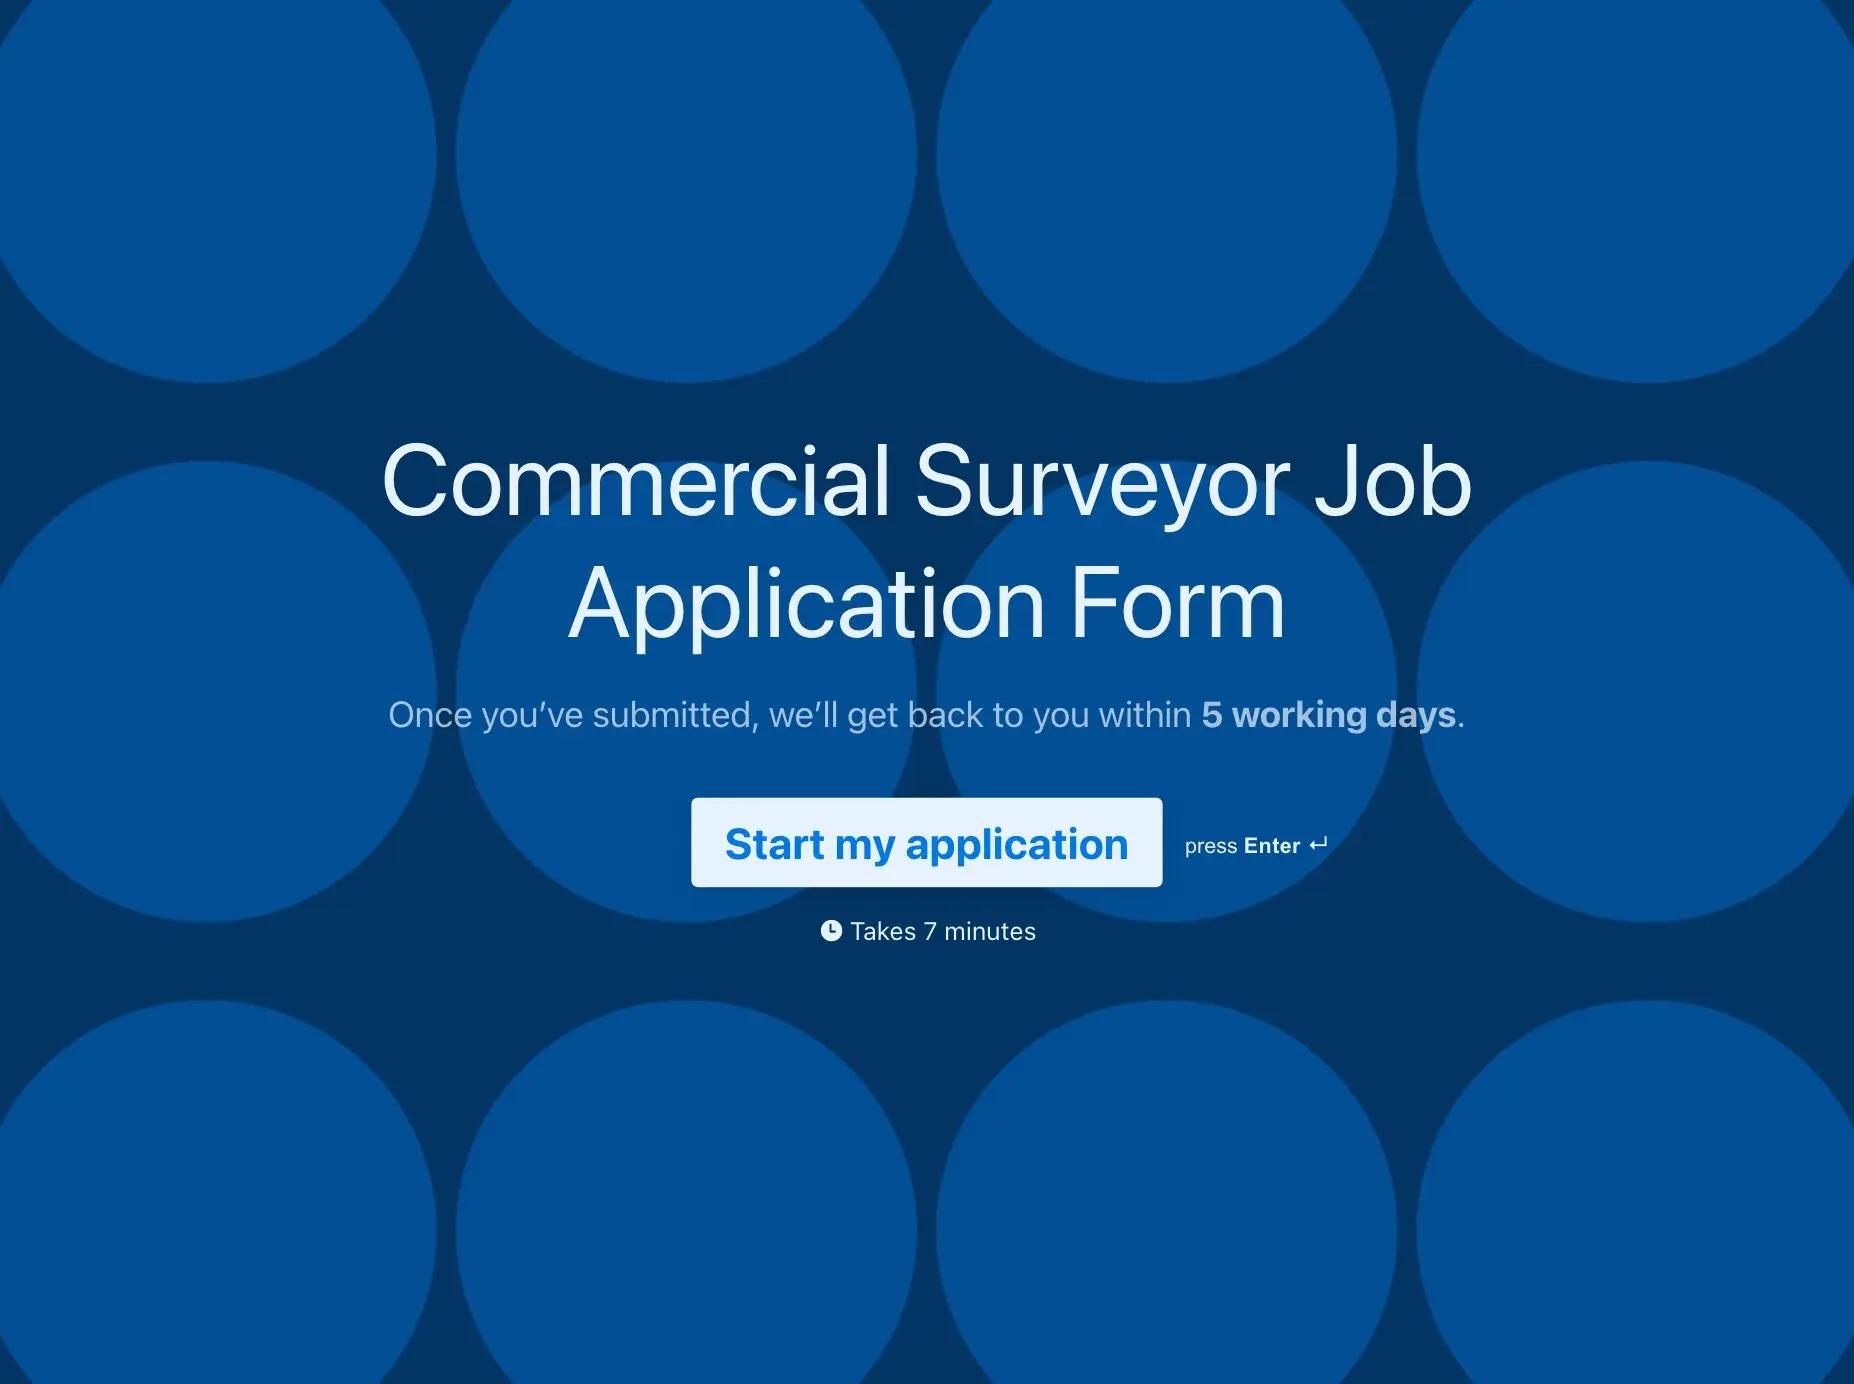 Commercial Surveyor Job Application Form Template Hero